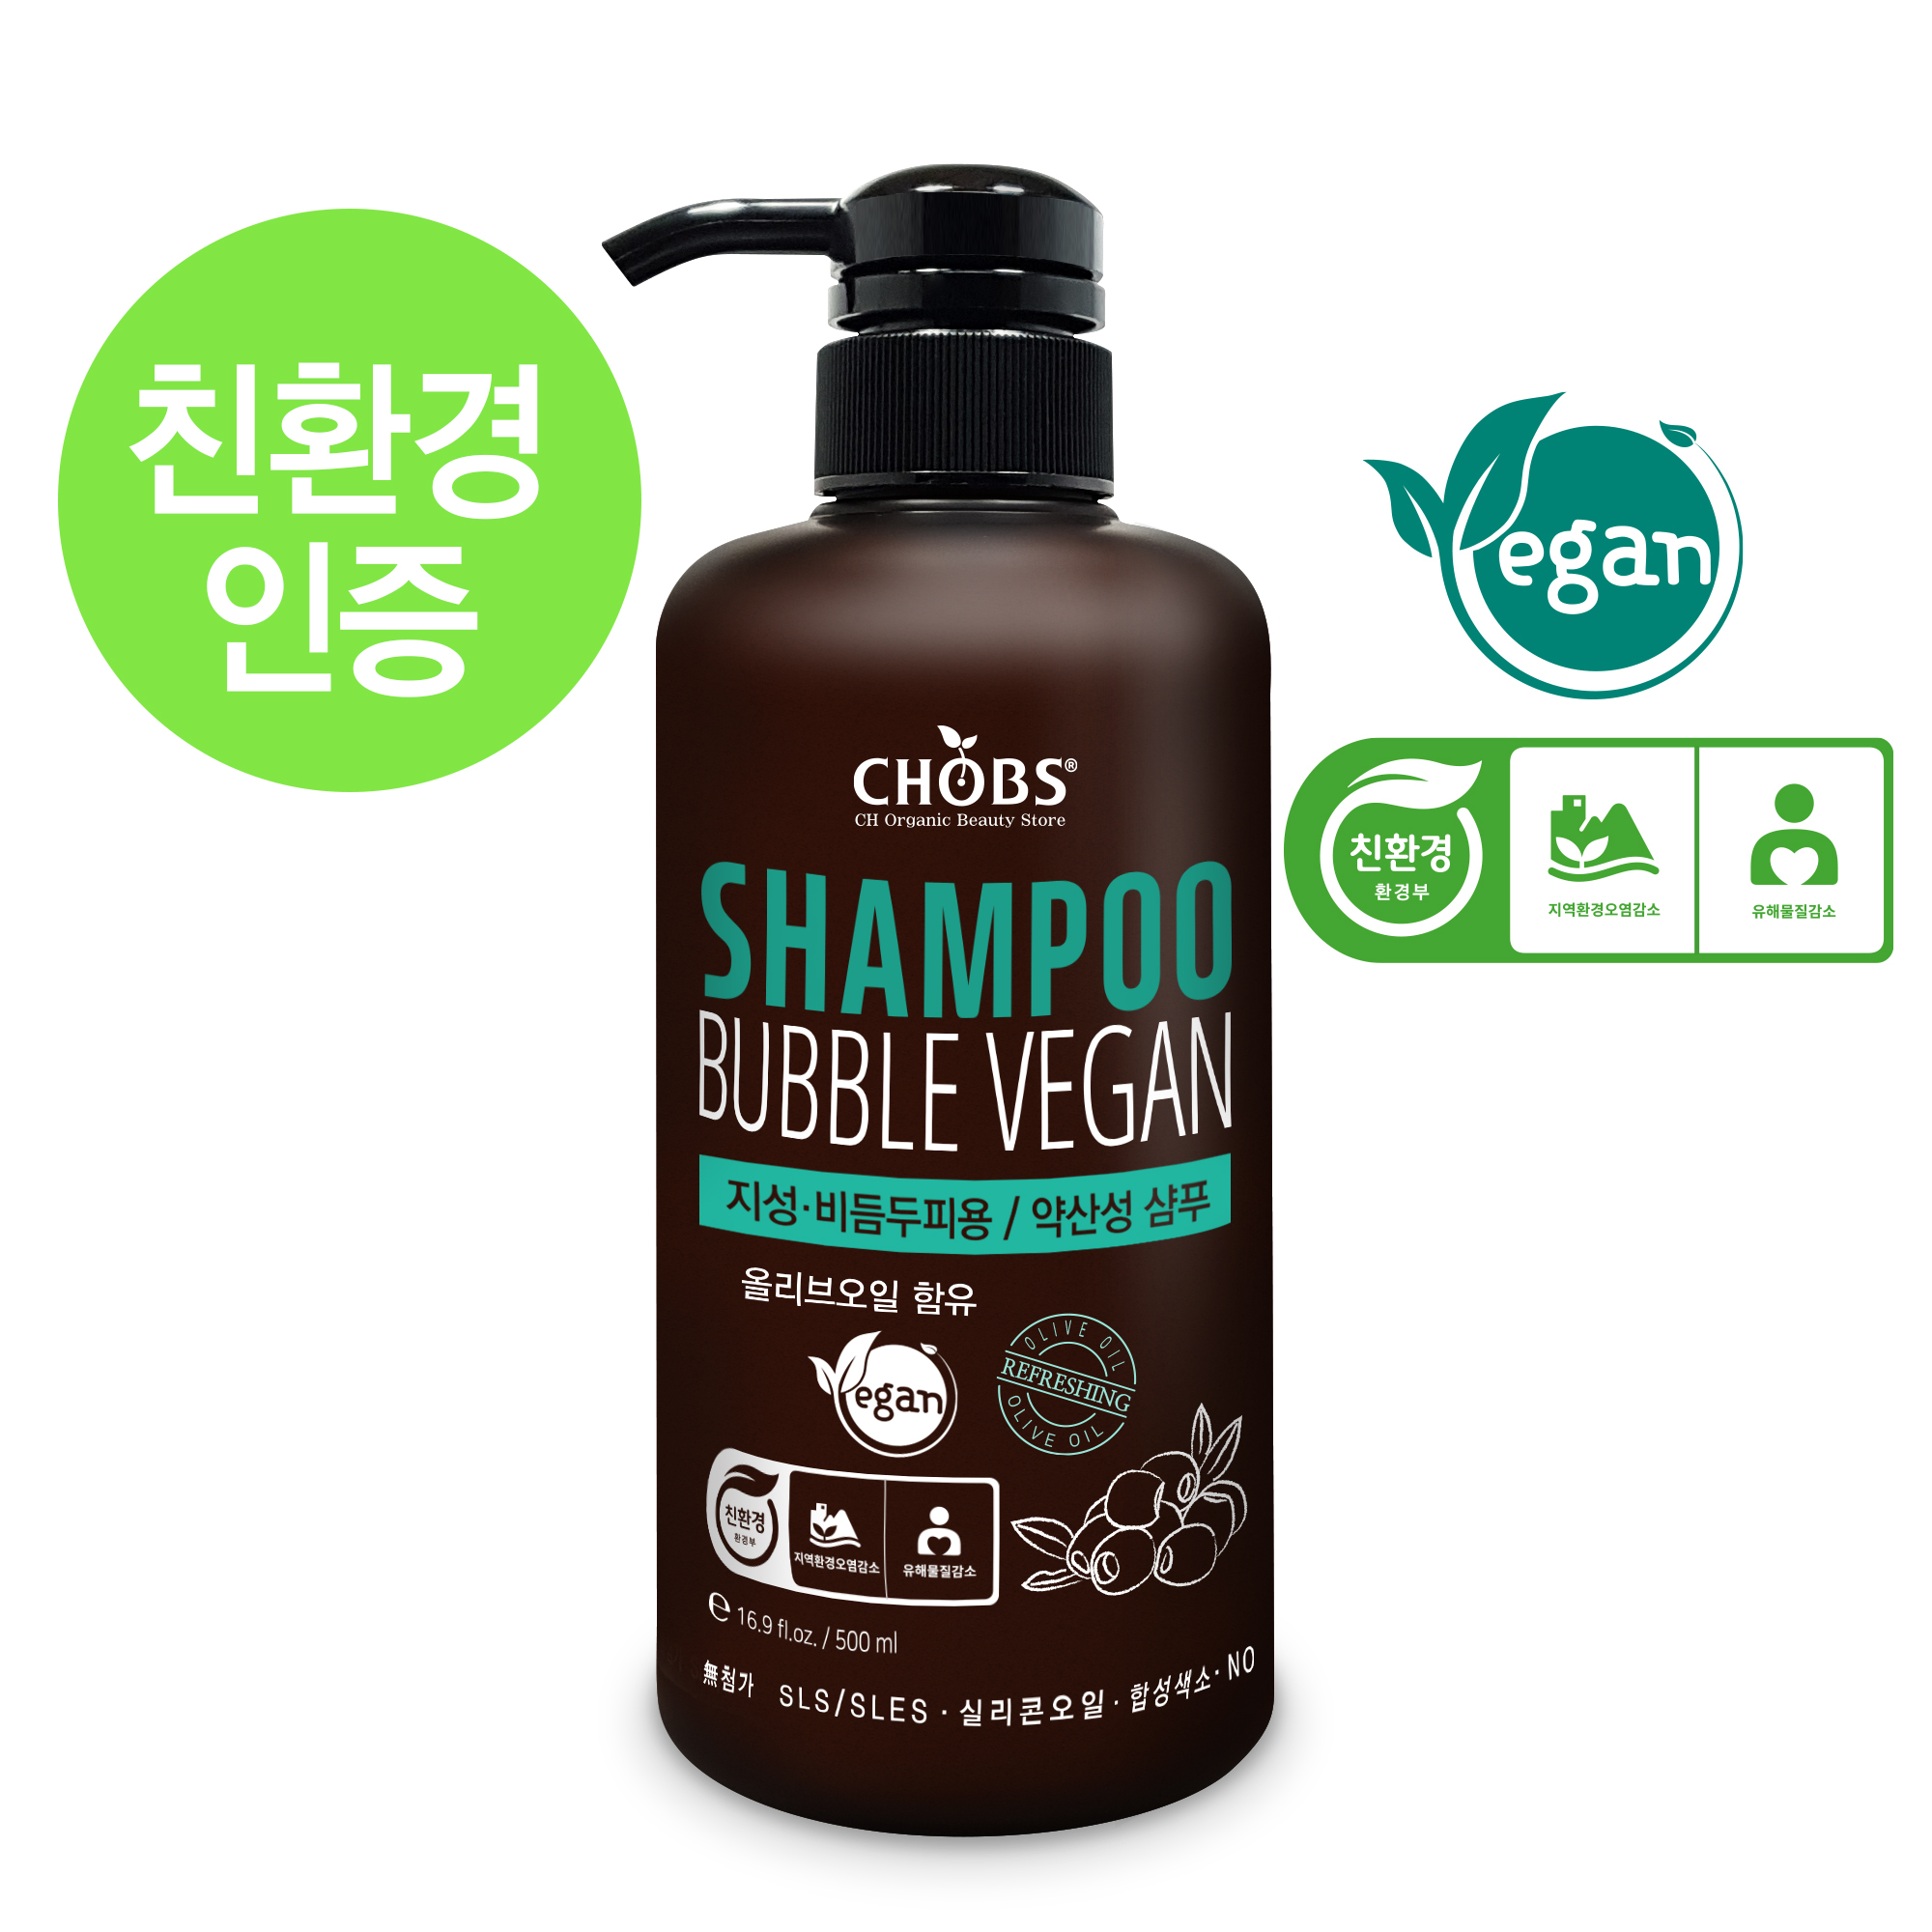 CHOBS(찹스) 친환경 샴푸 버블 비건 500ml CHOBS Shampoo Bubble Vegan 500ml